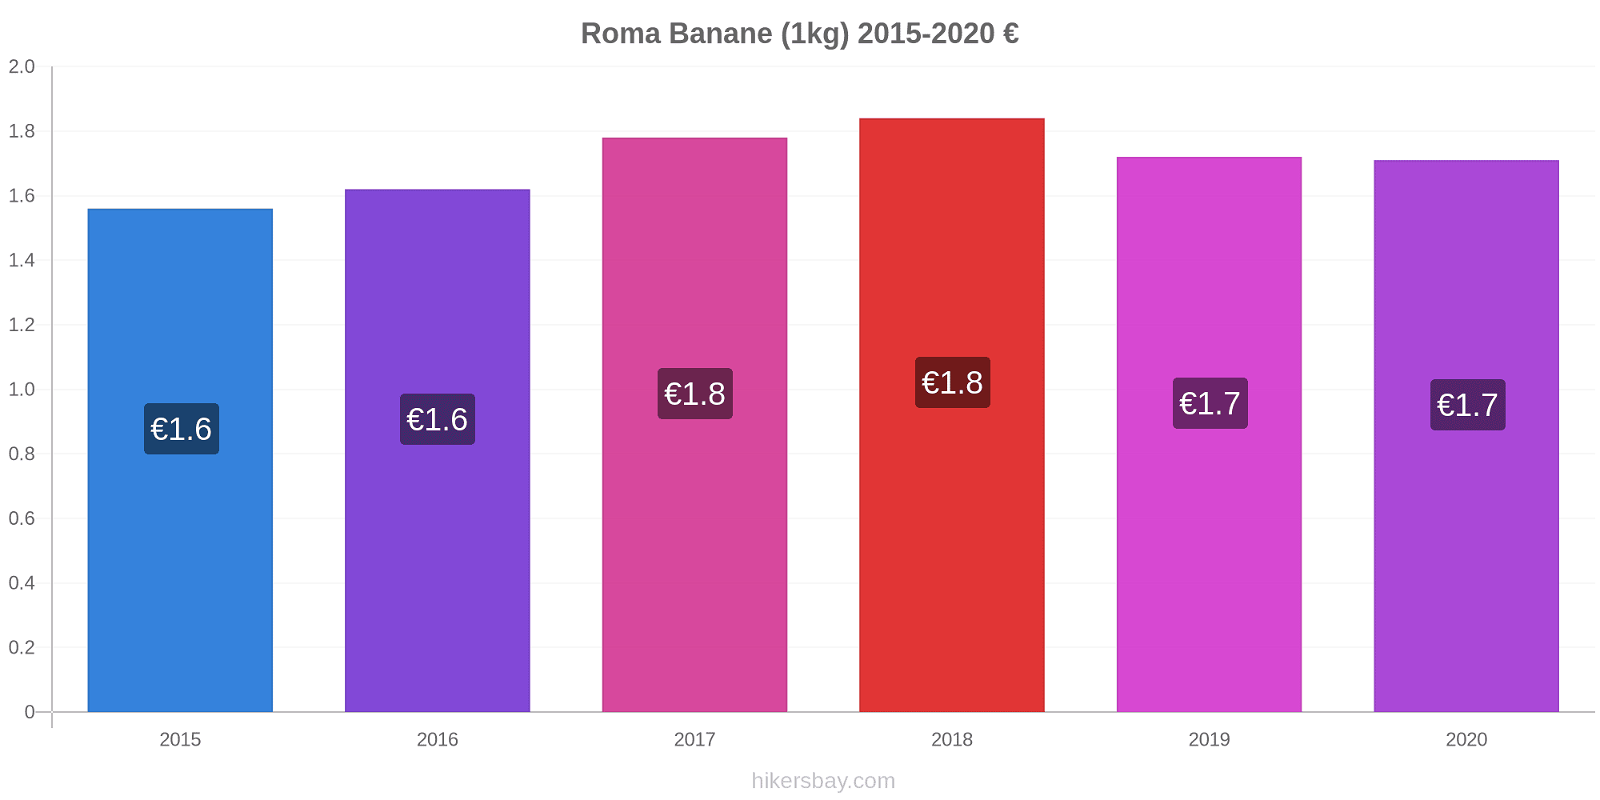 Roma variazioni di prezzo Banana (1kg) hikersbay.com